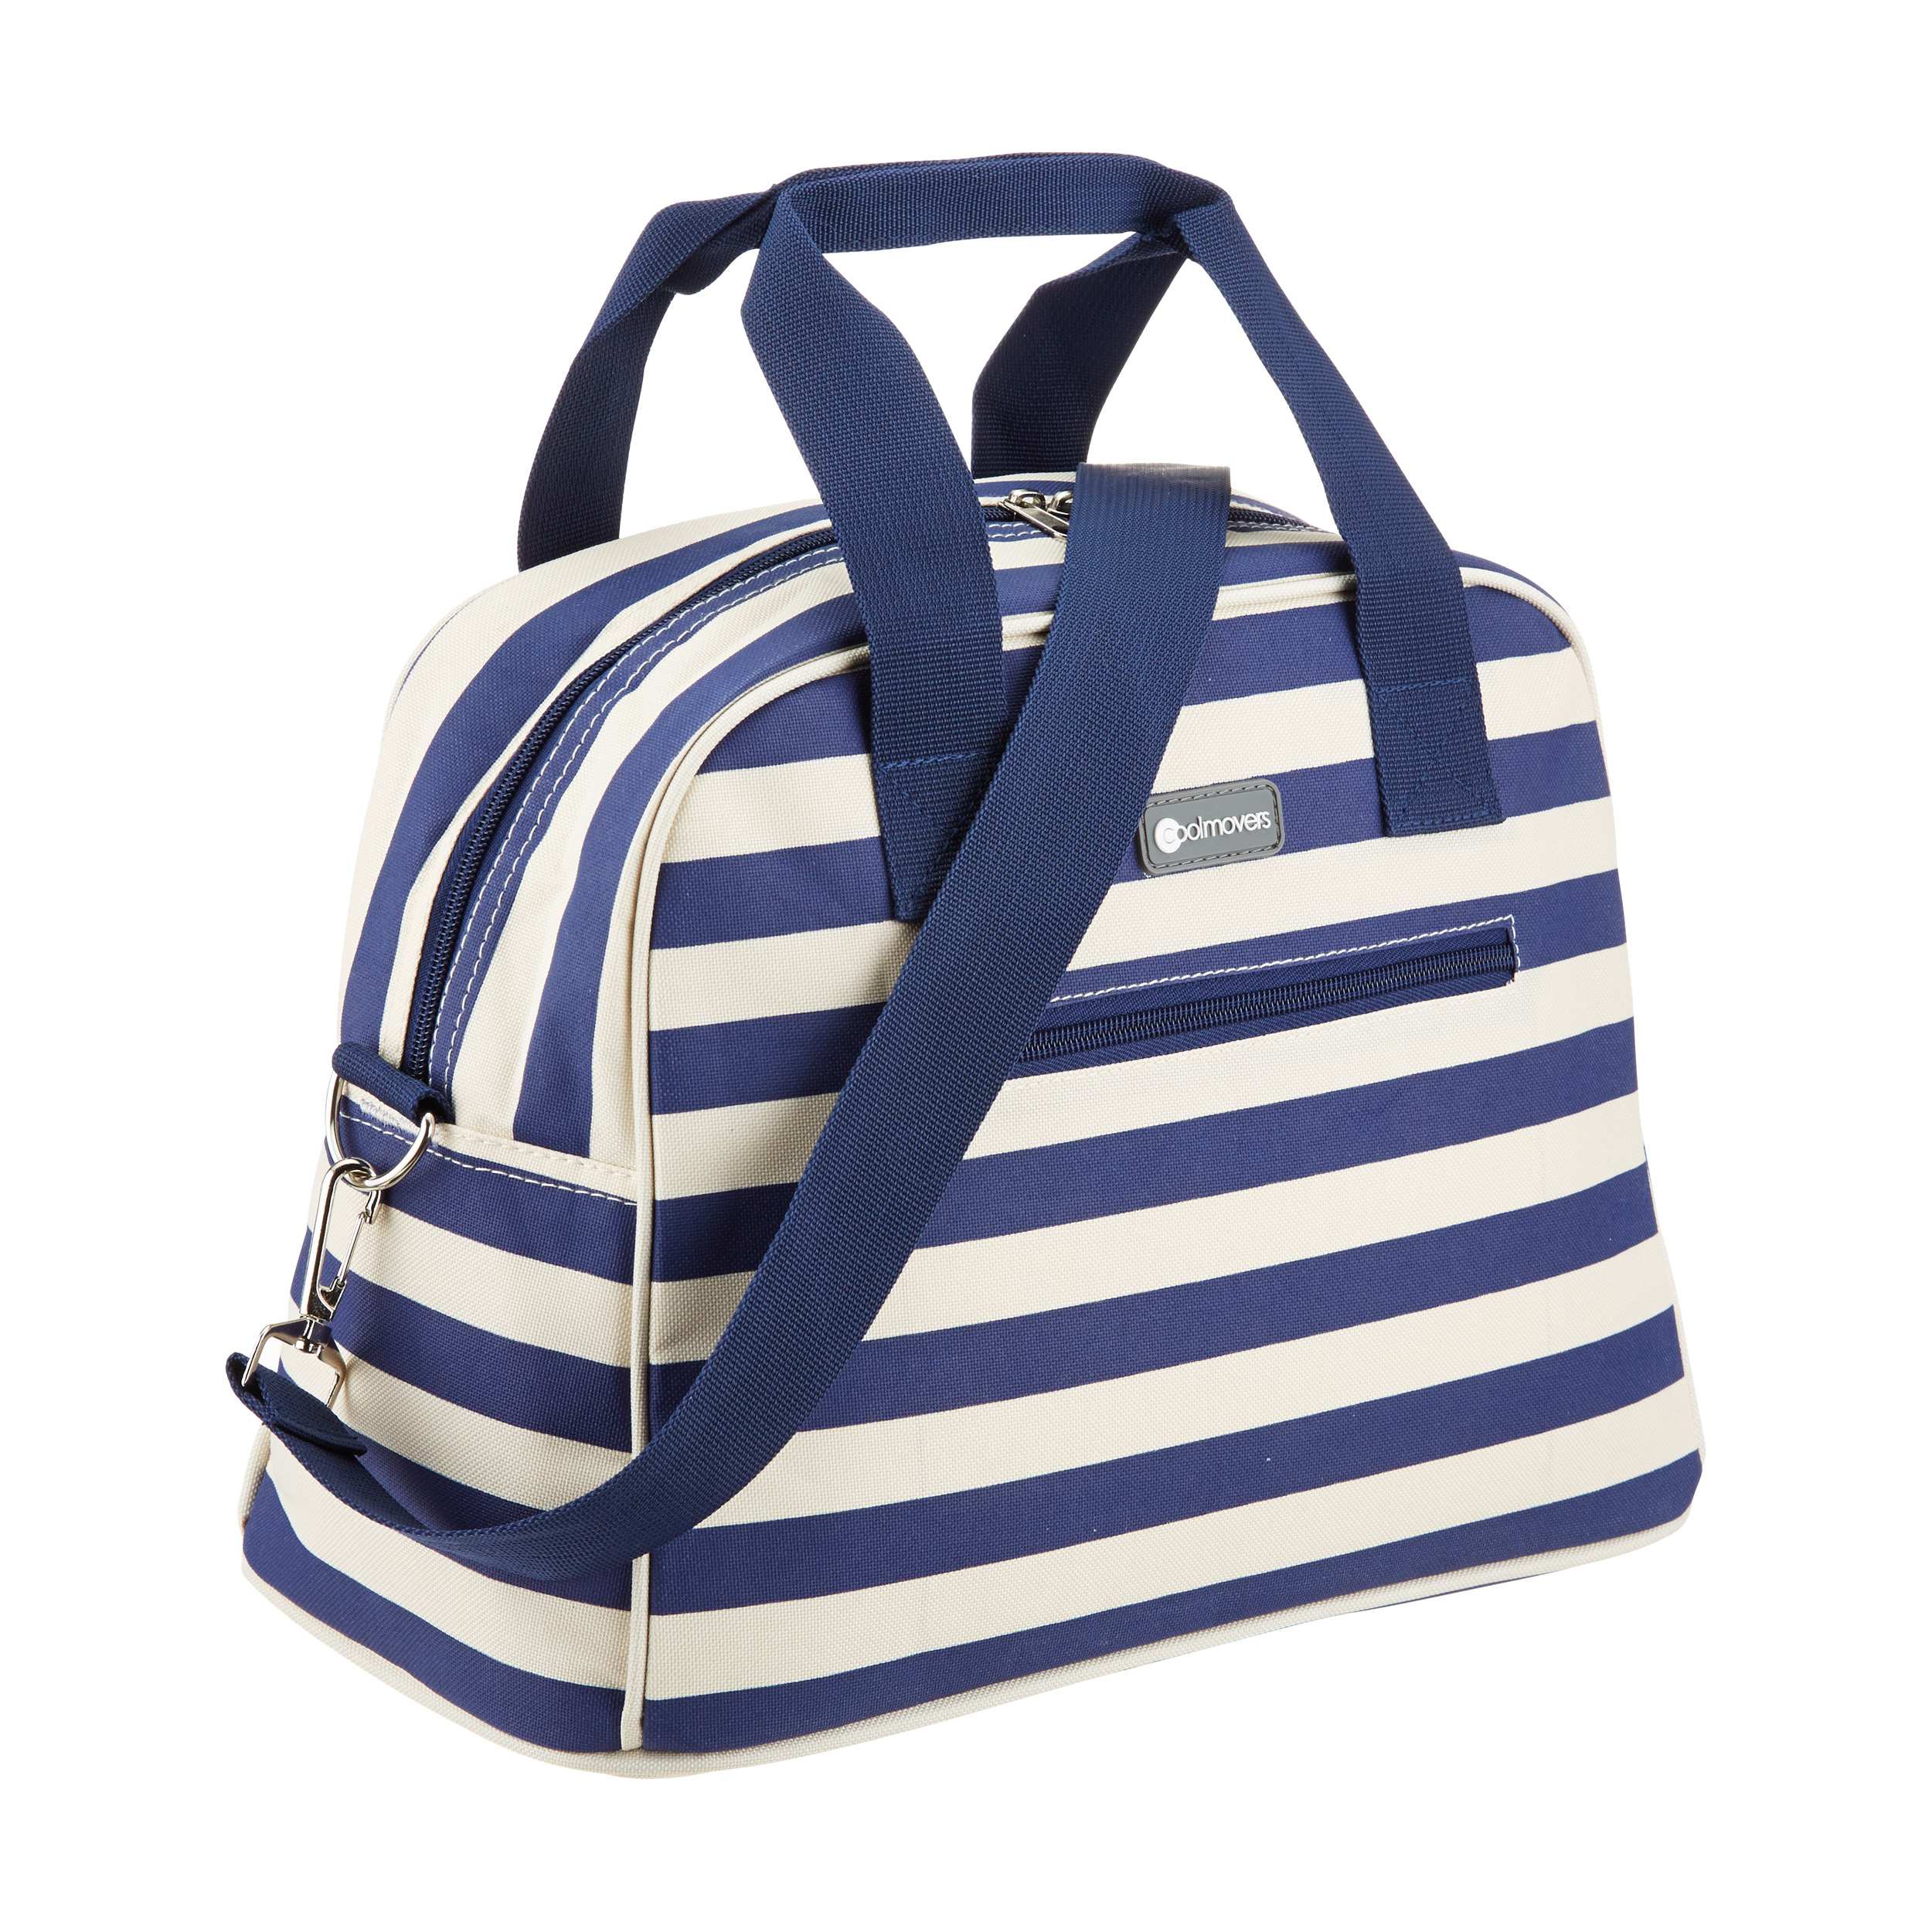 Cool Bag Blue Stripes Summer LulWorth Kitchencraft